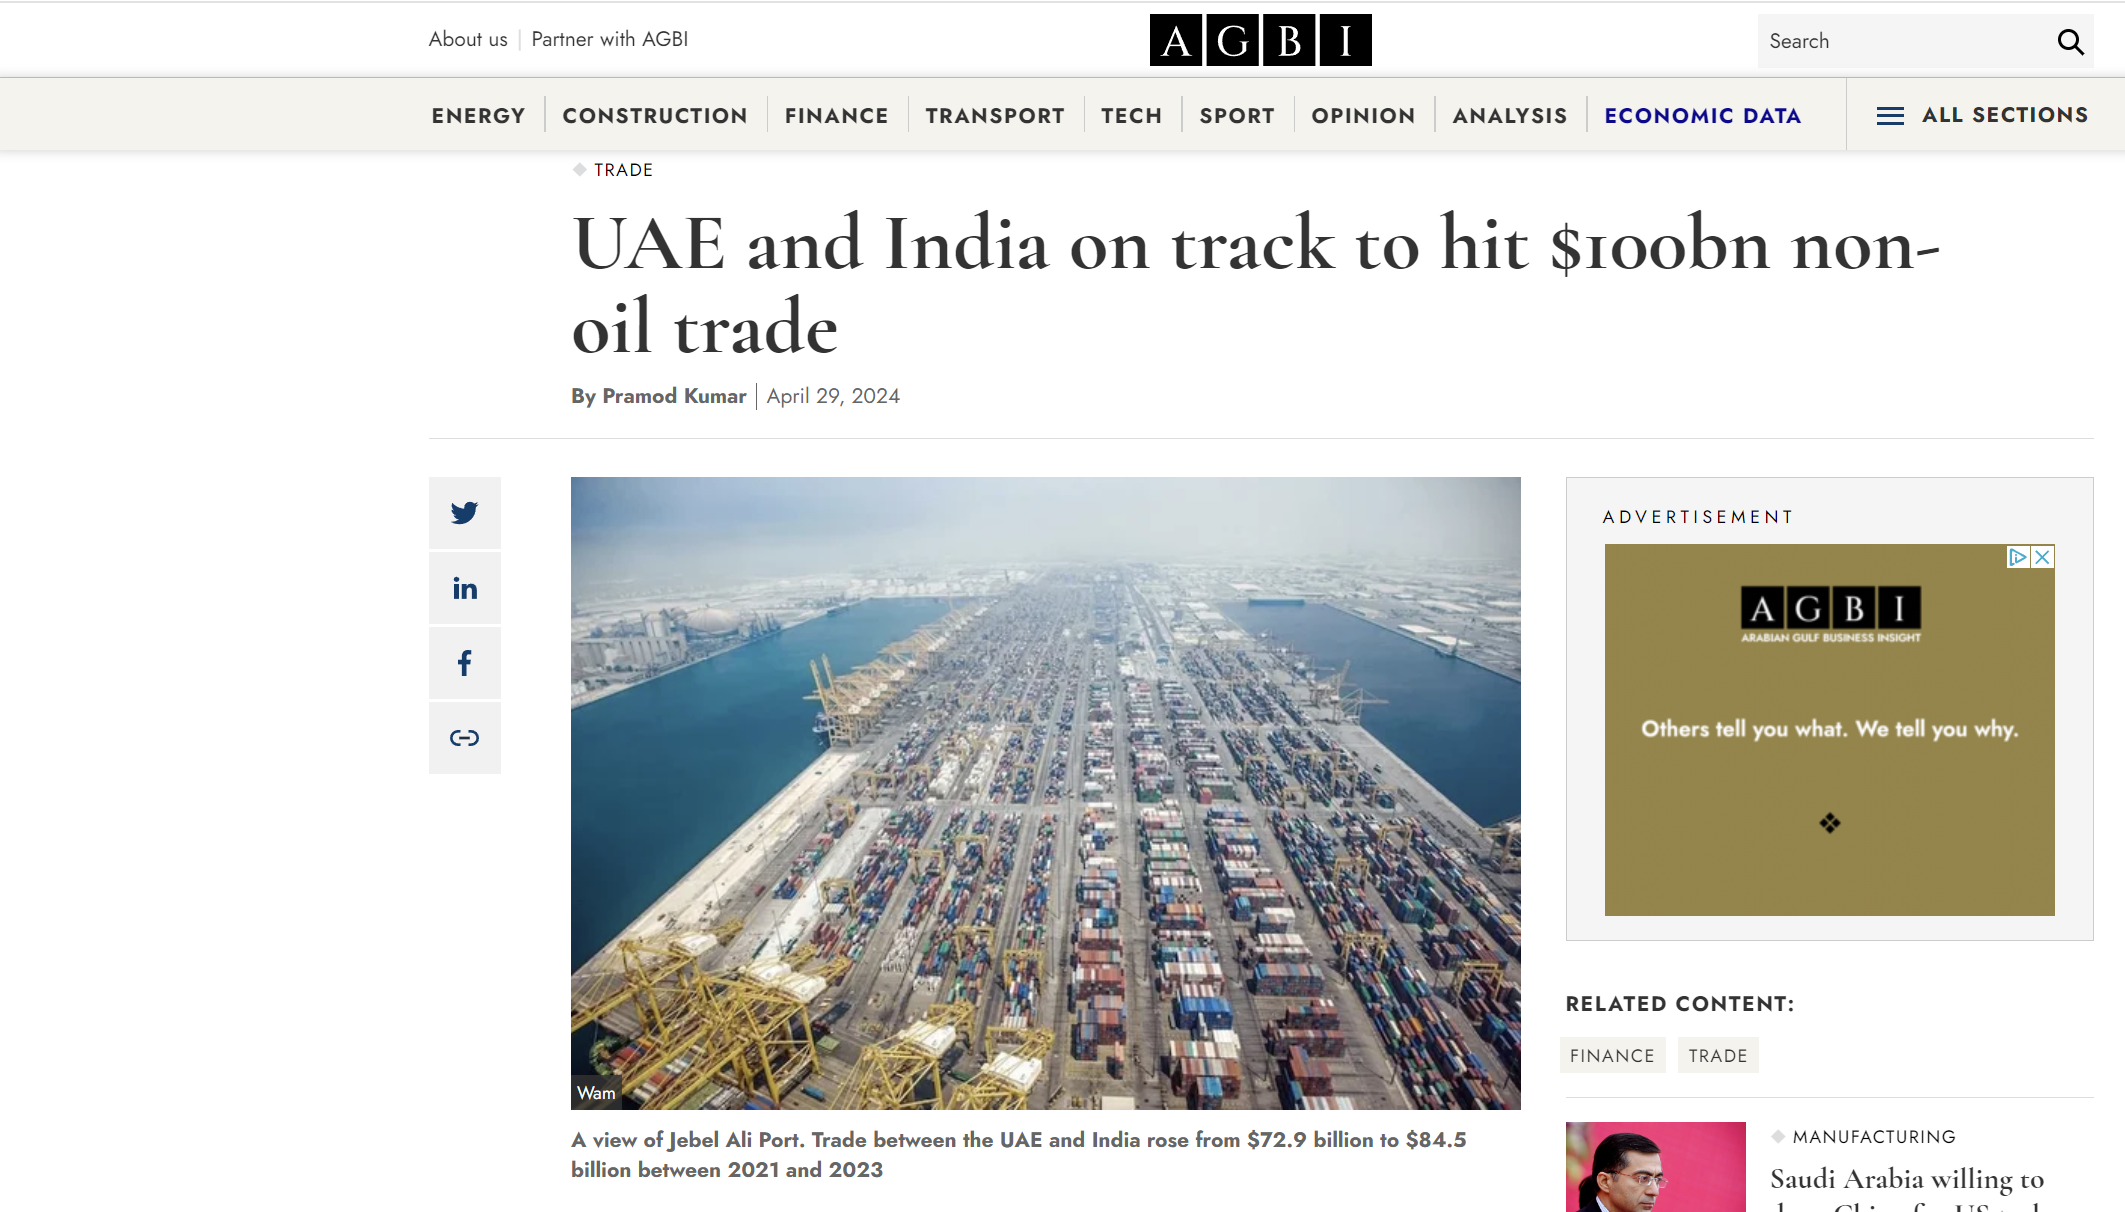 Arabian Gulf Business Insight:  ΗΑΕ και Ινδία θα ξεπεράσουν τα 100 δις δολάρια στο εμπόριο μέχρι το 2030